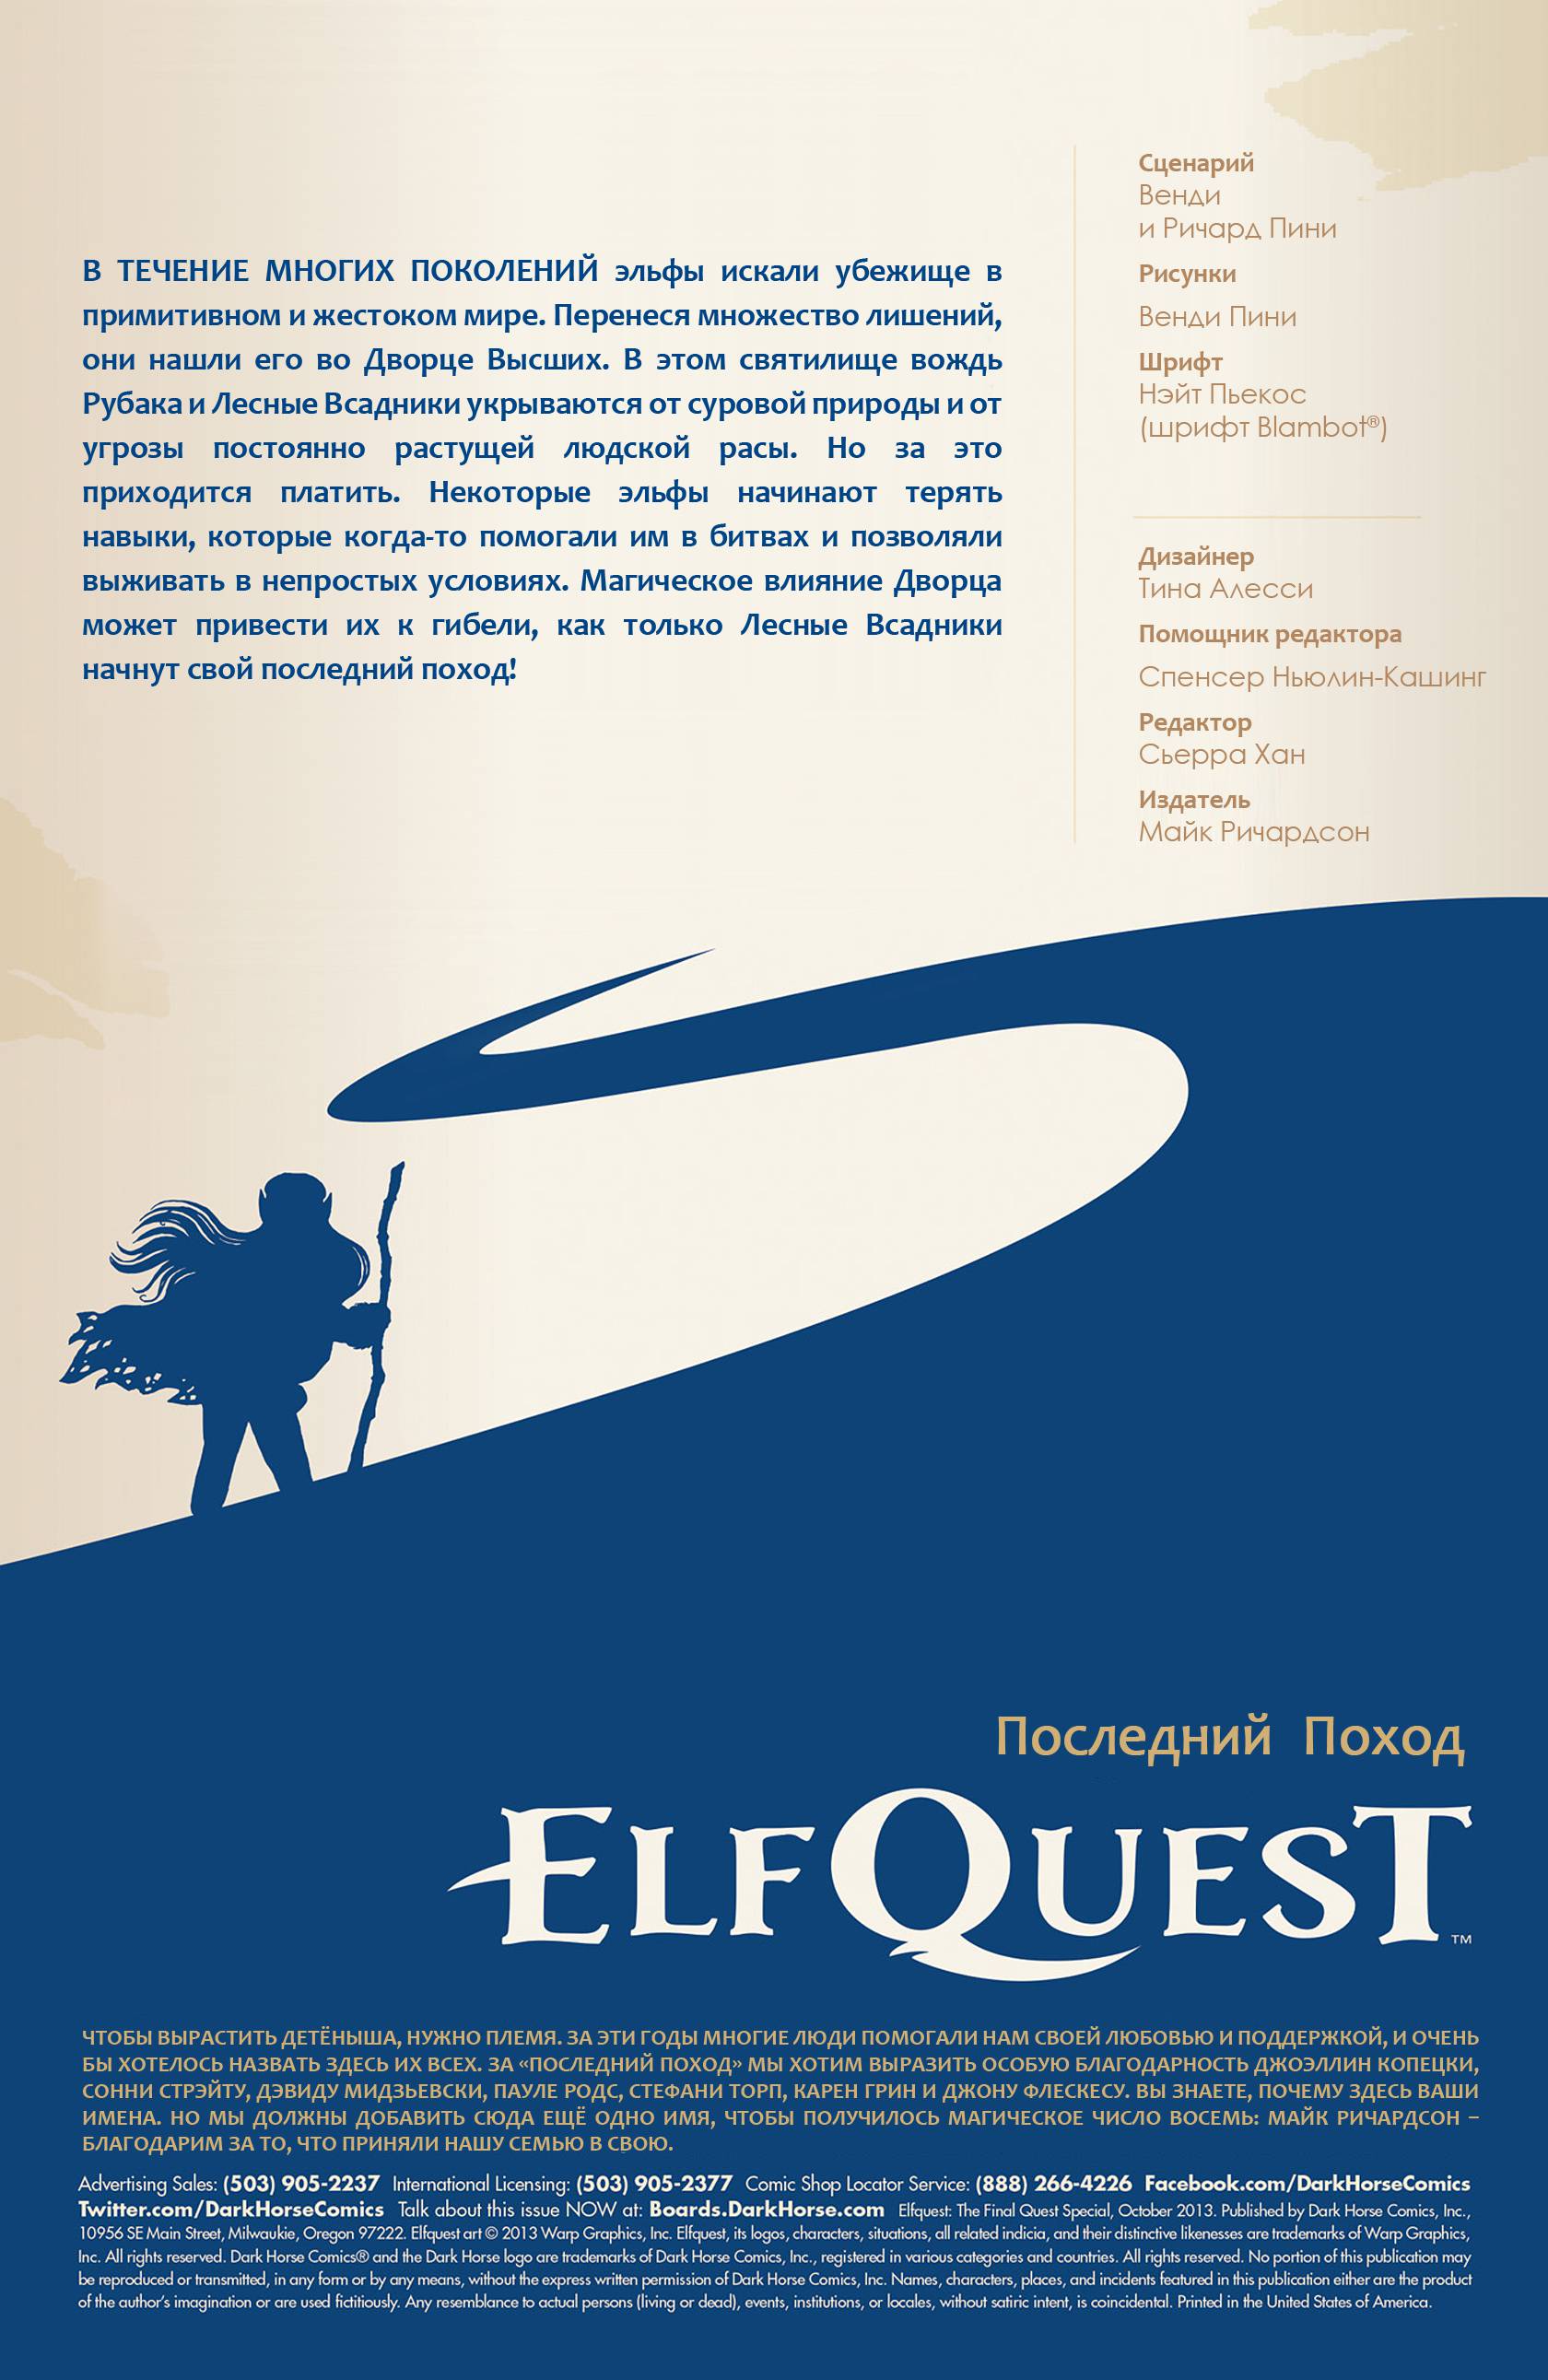 Elfquest Спецвыпуск: Последнй Поход онлайн